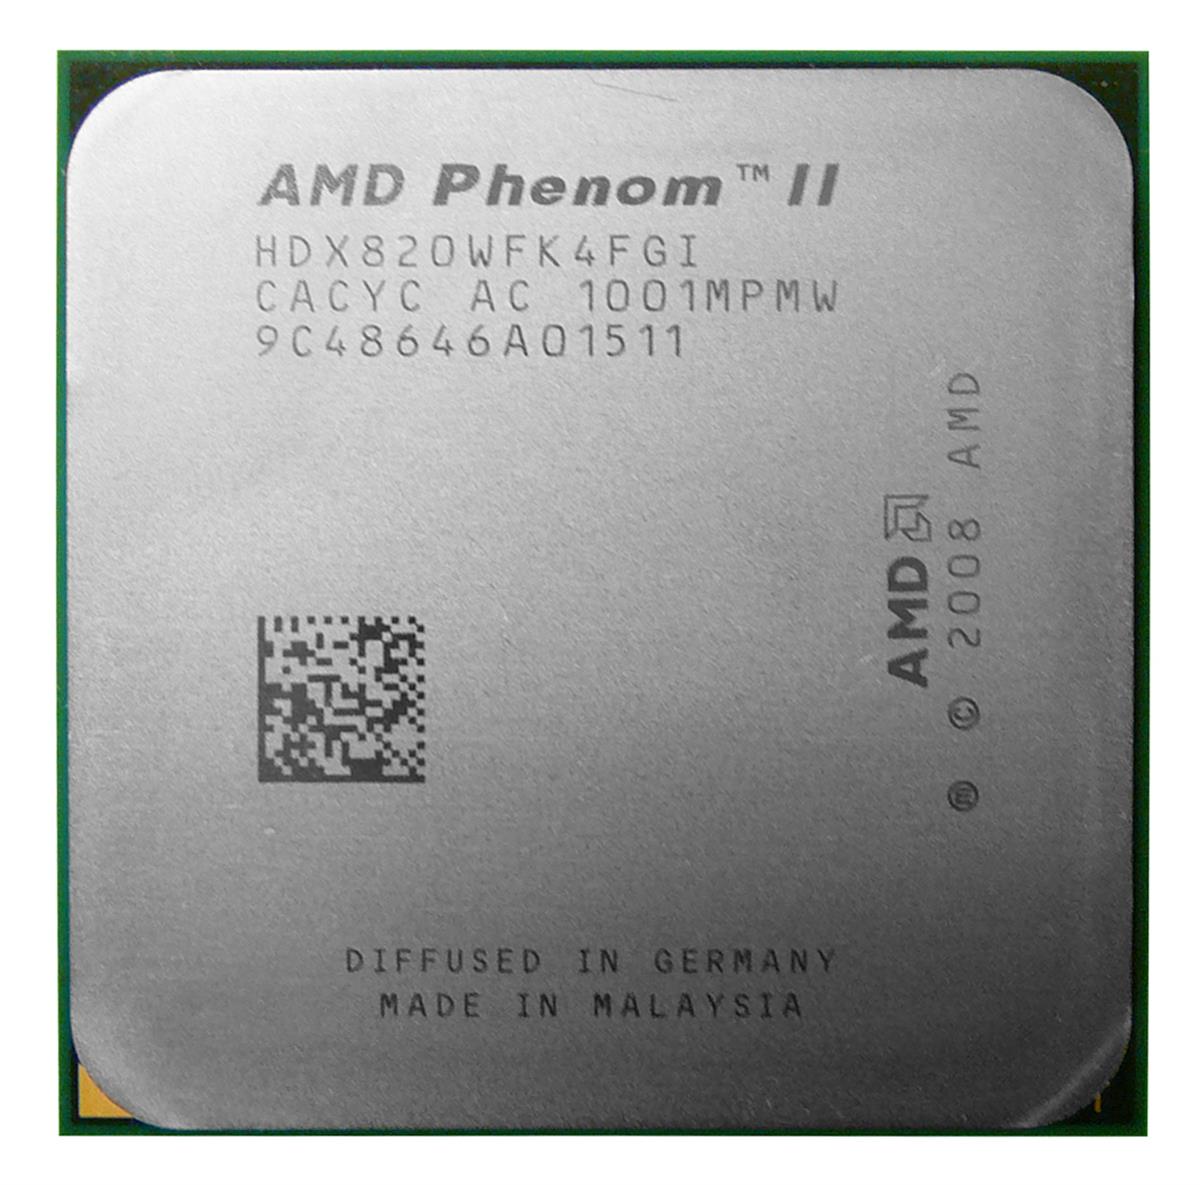 HDX820WFK4FGI AMD Phenom II X4 820 Quad-Core 2.80GHz 4.00HGT/s 4MB L3 Cache Socket AM2+ Processor